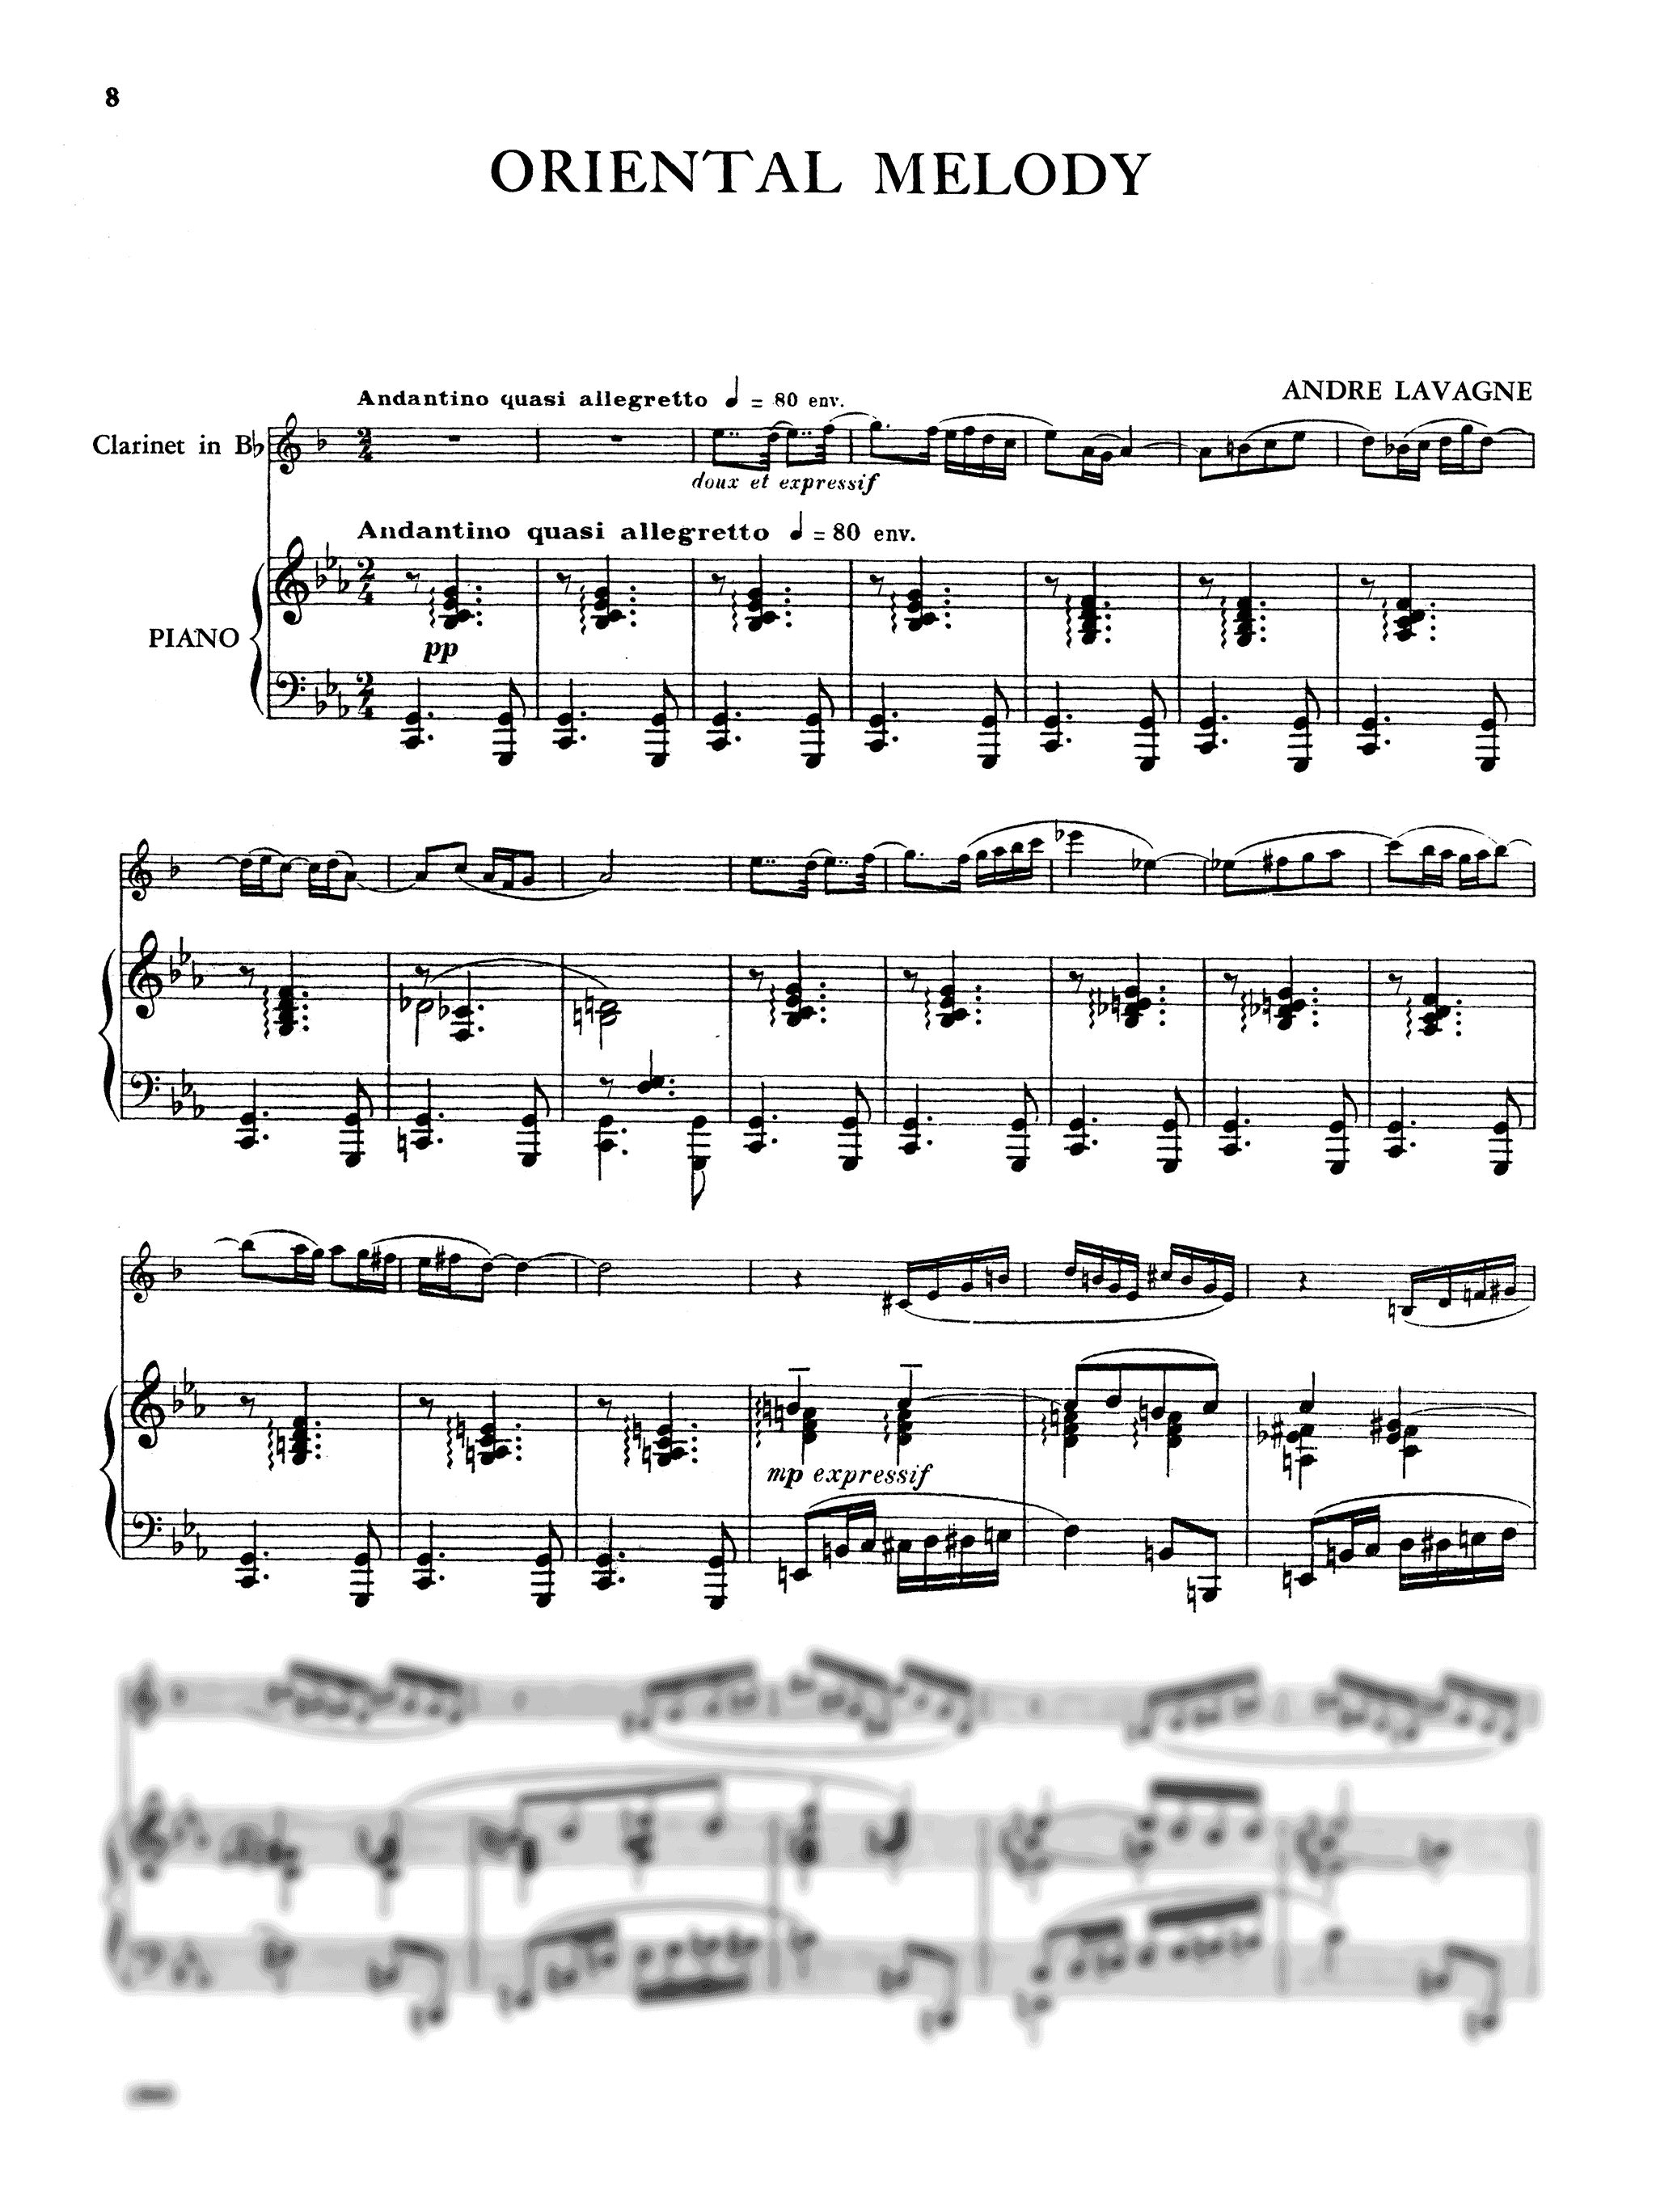 Lavagne Oriental Melody Score